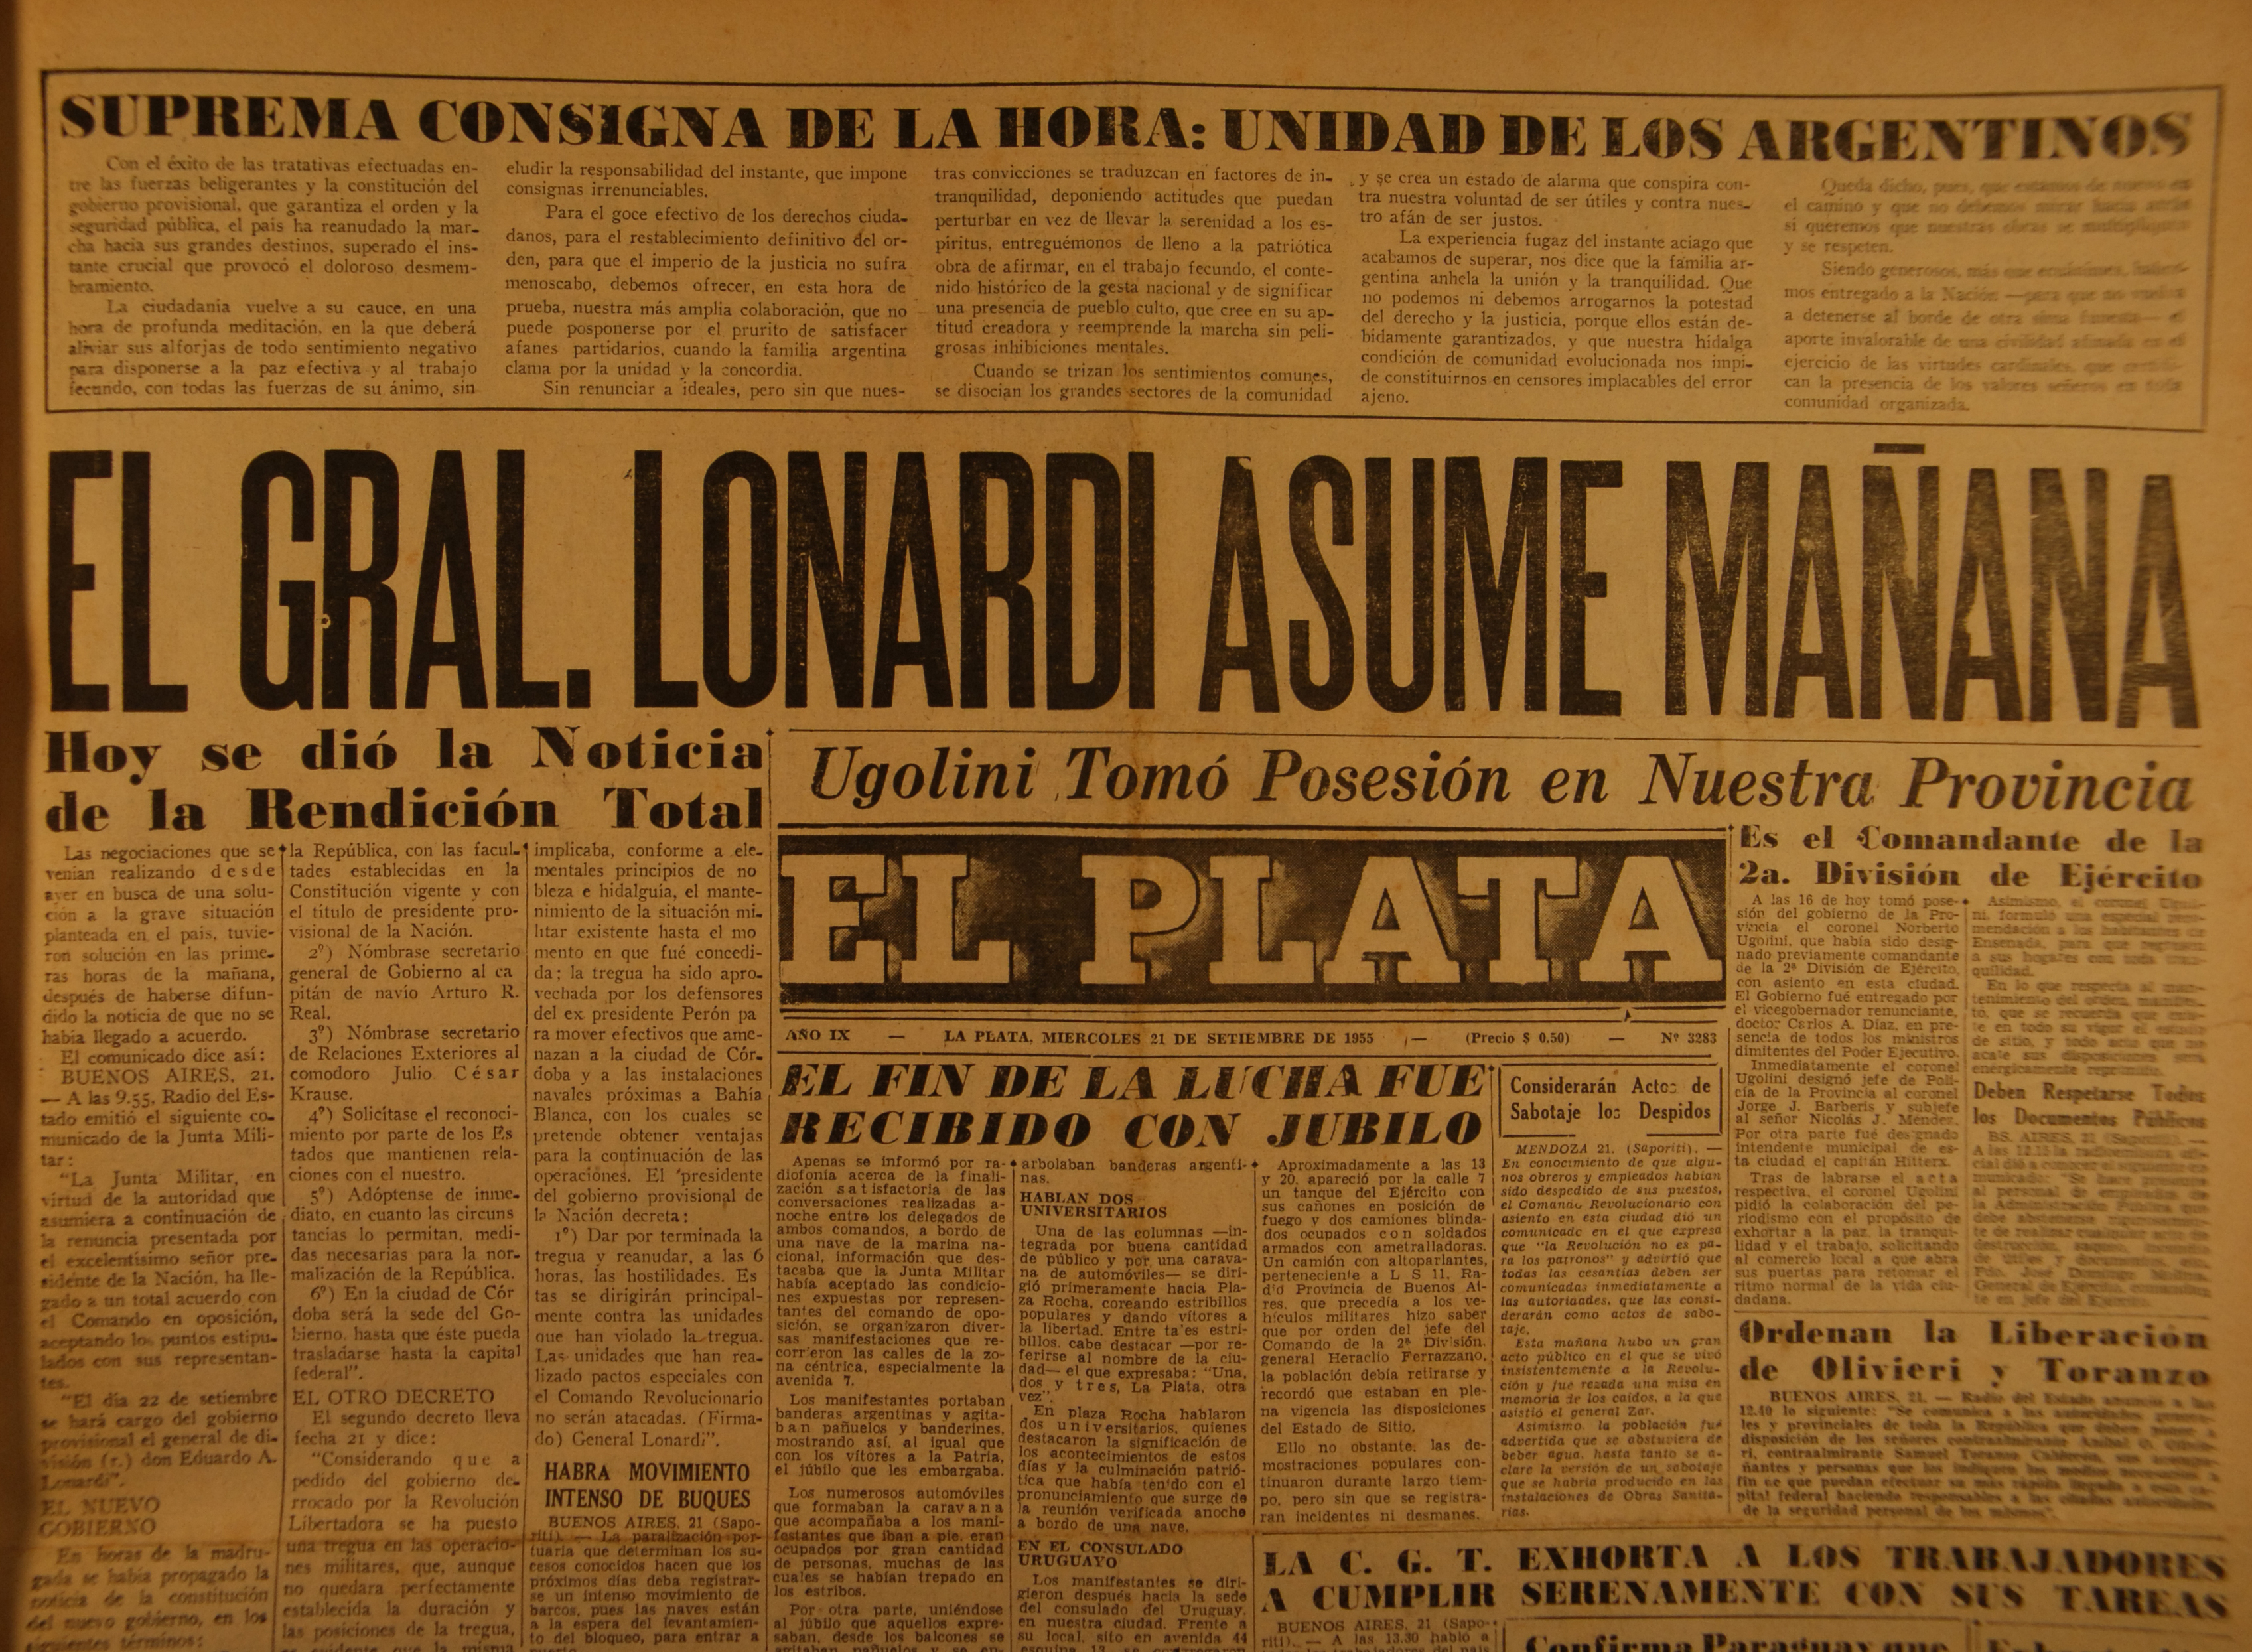 "El General Lonardi asume mañana".